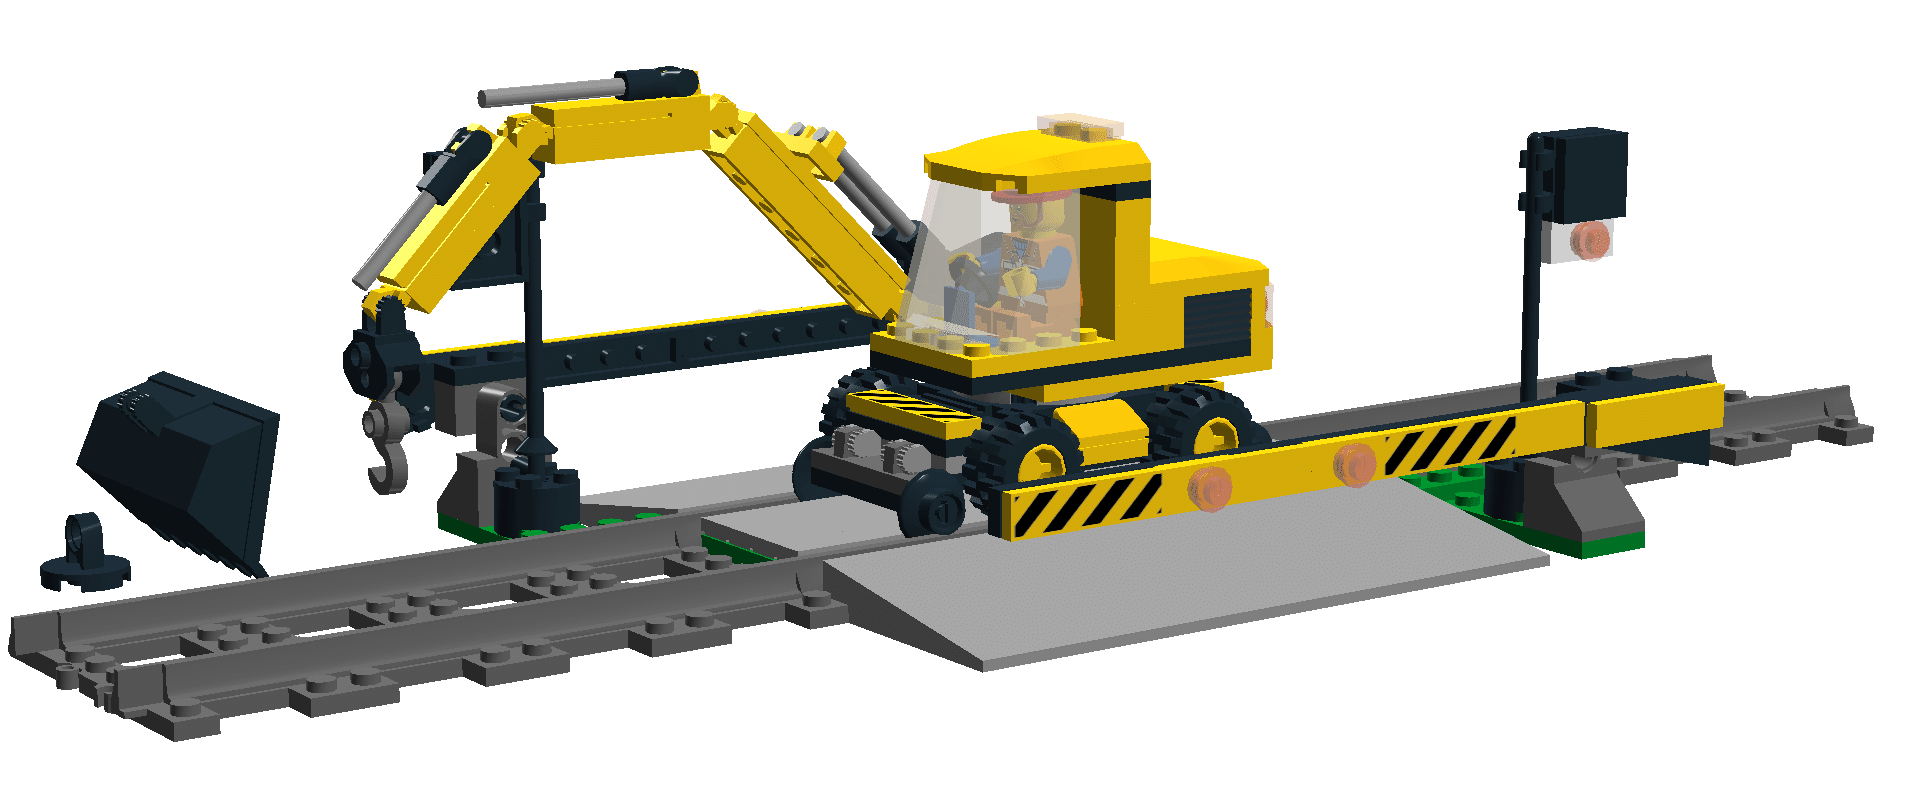 pensum Jeg er stolt Kommandør Lego® Instructions 7936 - Manutenzione passaggio a livello - Riedizione